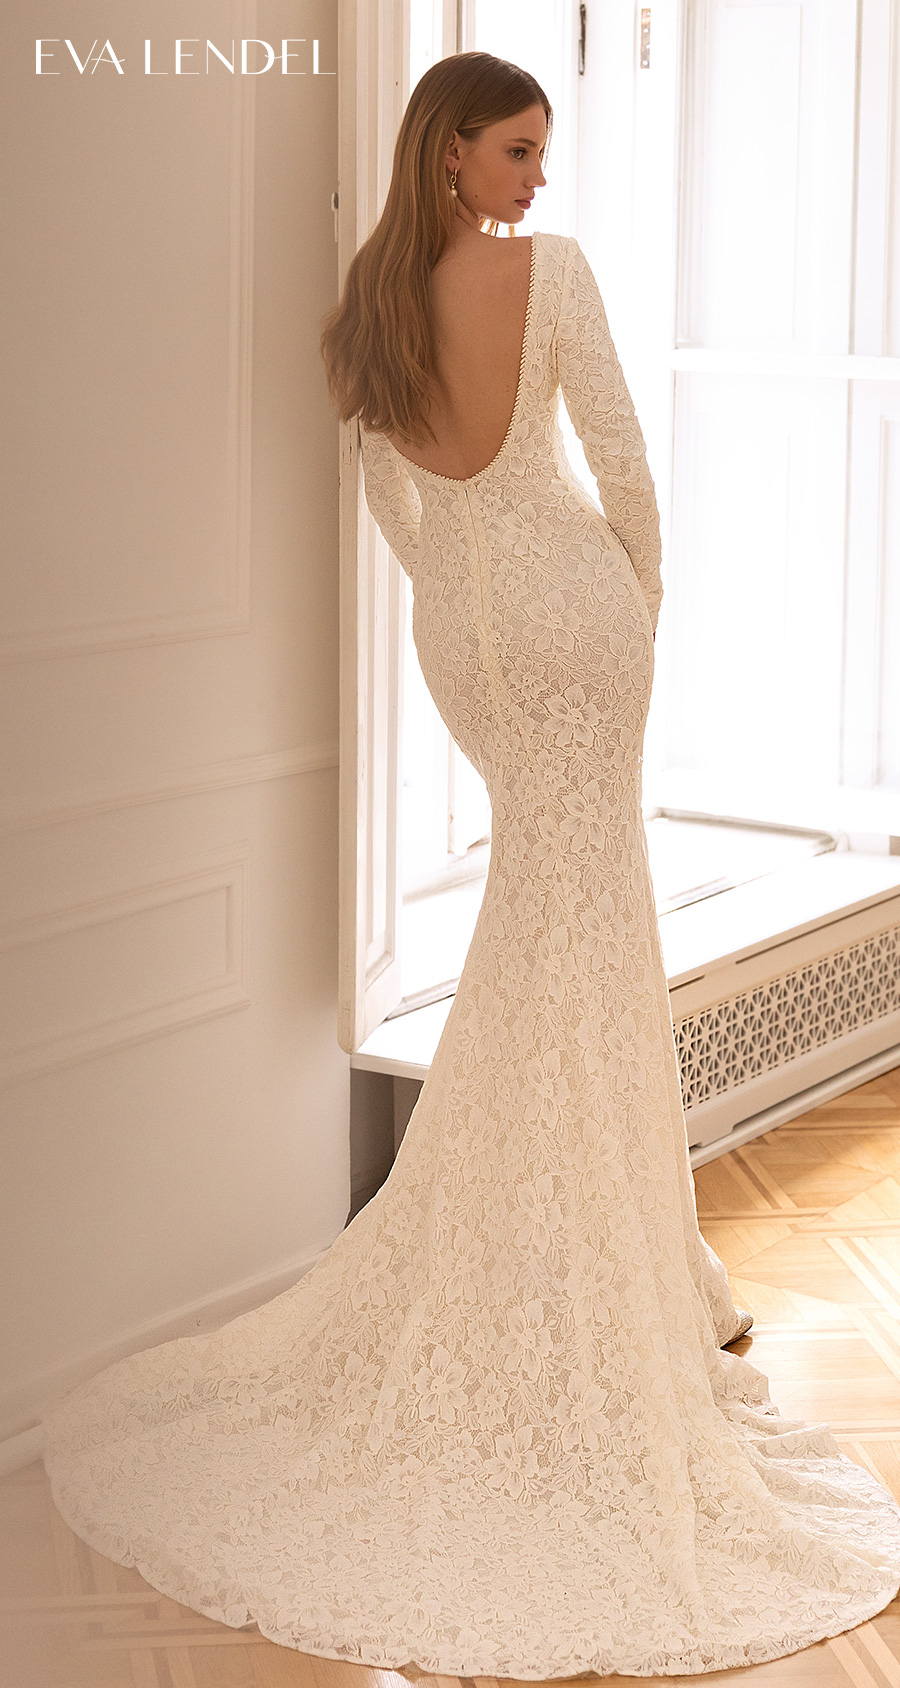 eva lendel 2022 bridal long sleeves bateau neckline full embellishment lace elegant sheath wedding dress low v back short train (reese) bv